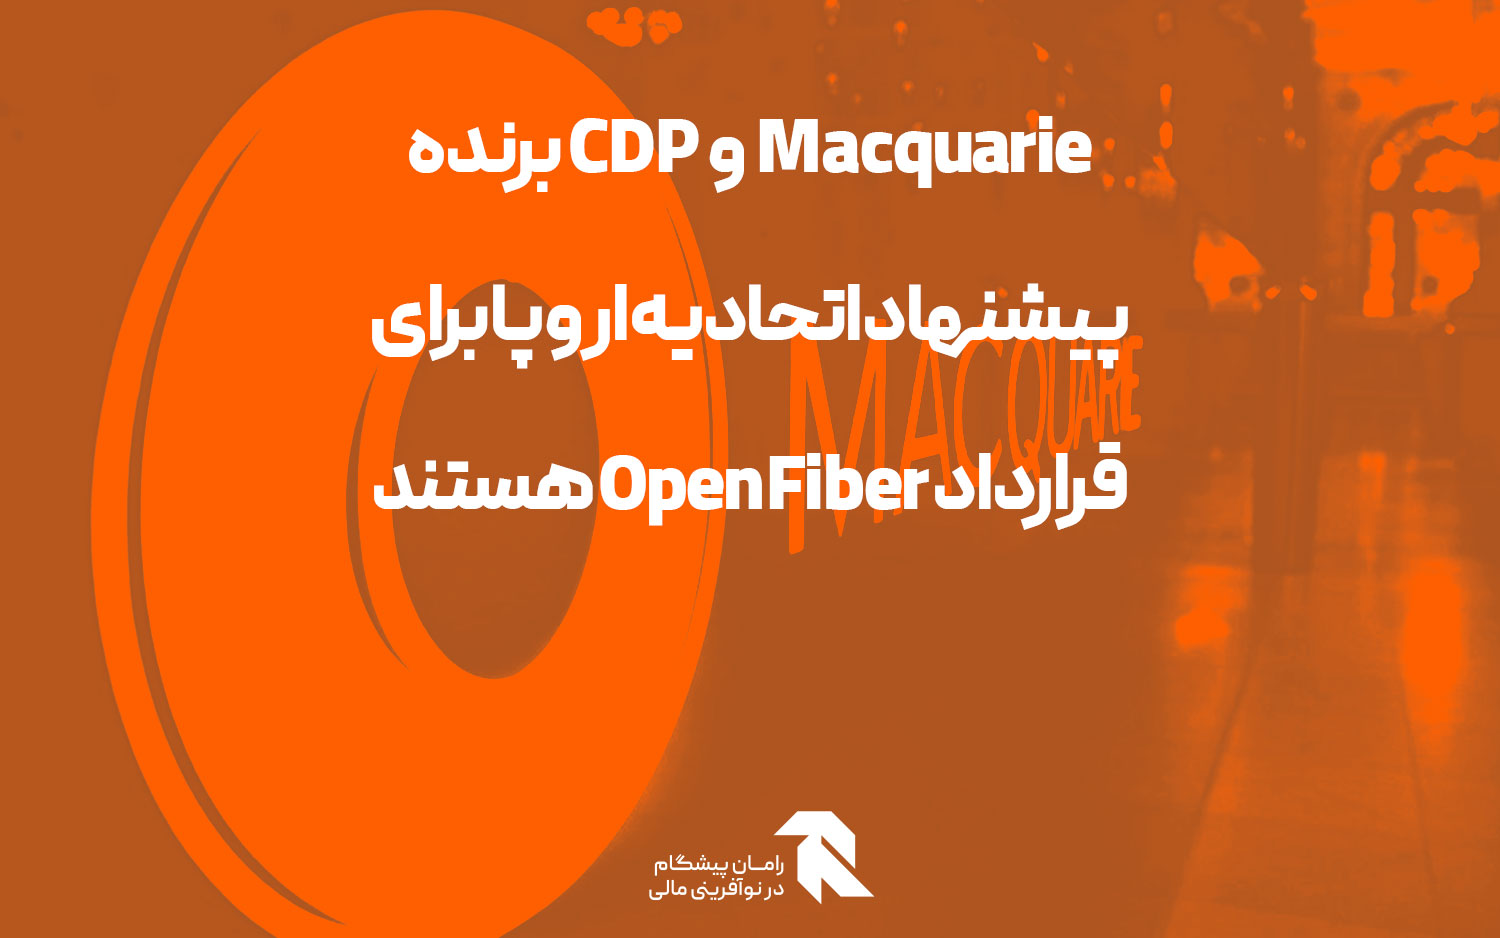 Macquarie و CDP برنده پیشنهاد اتحادیه اروپا برای قرارداد Open Fiber هستند